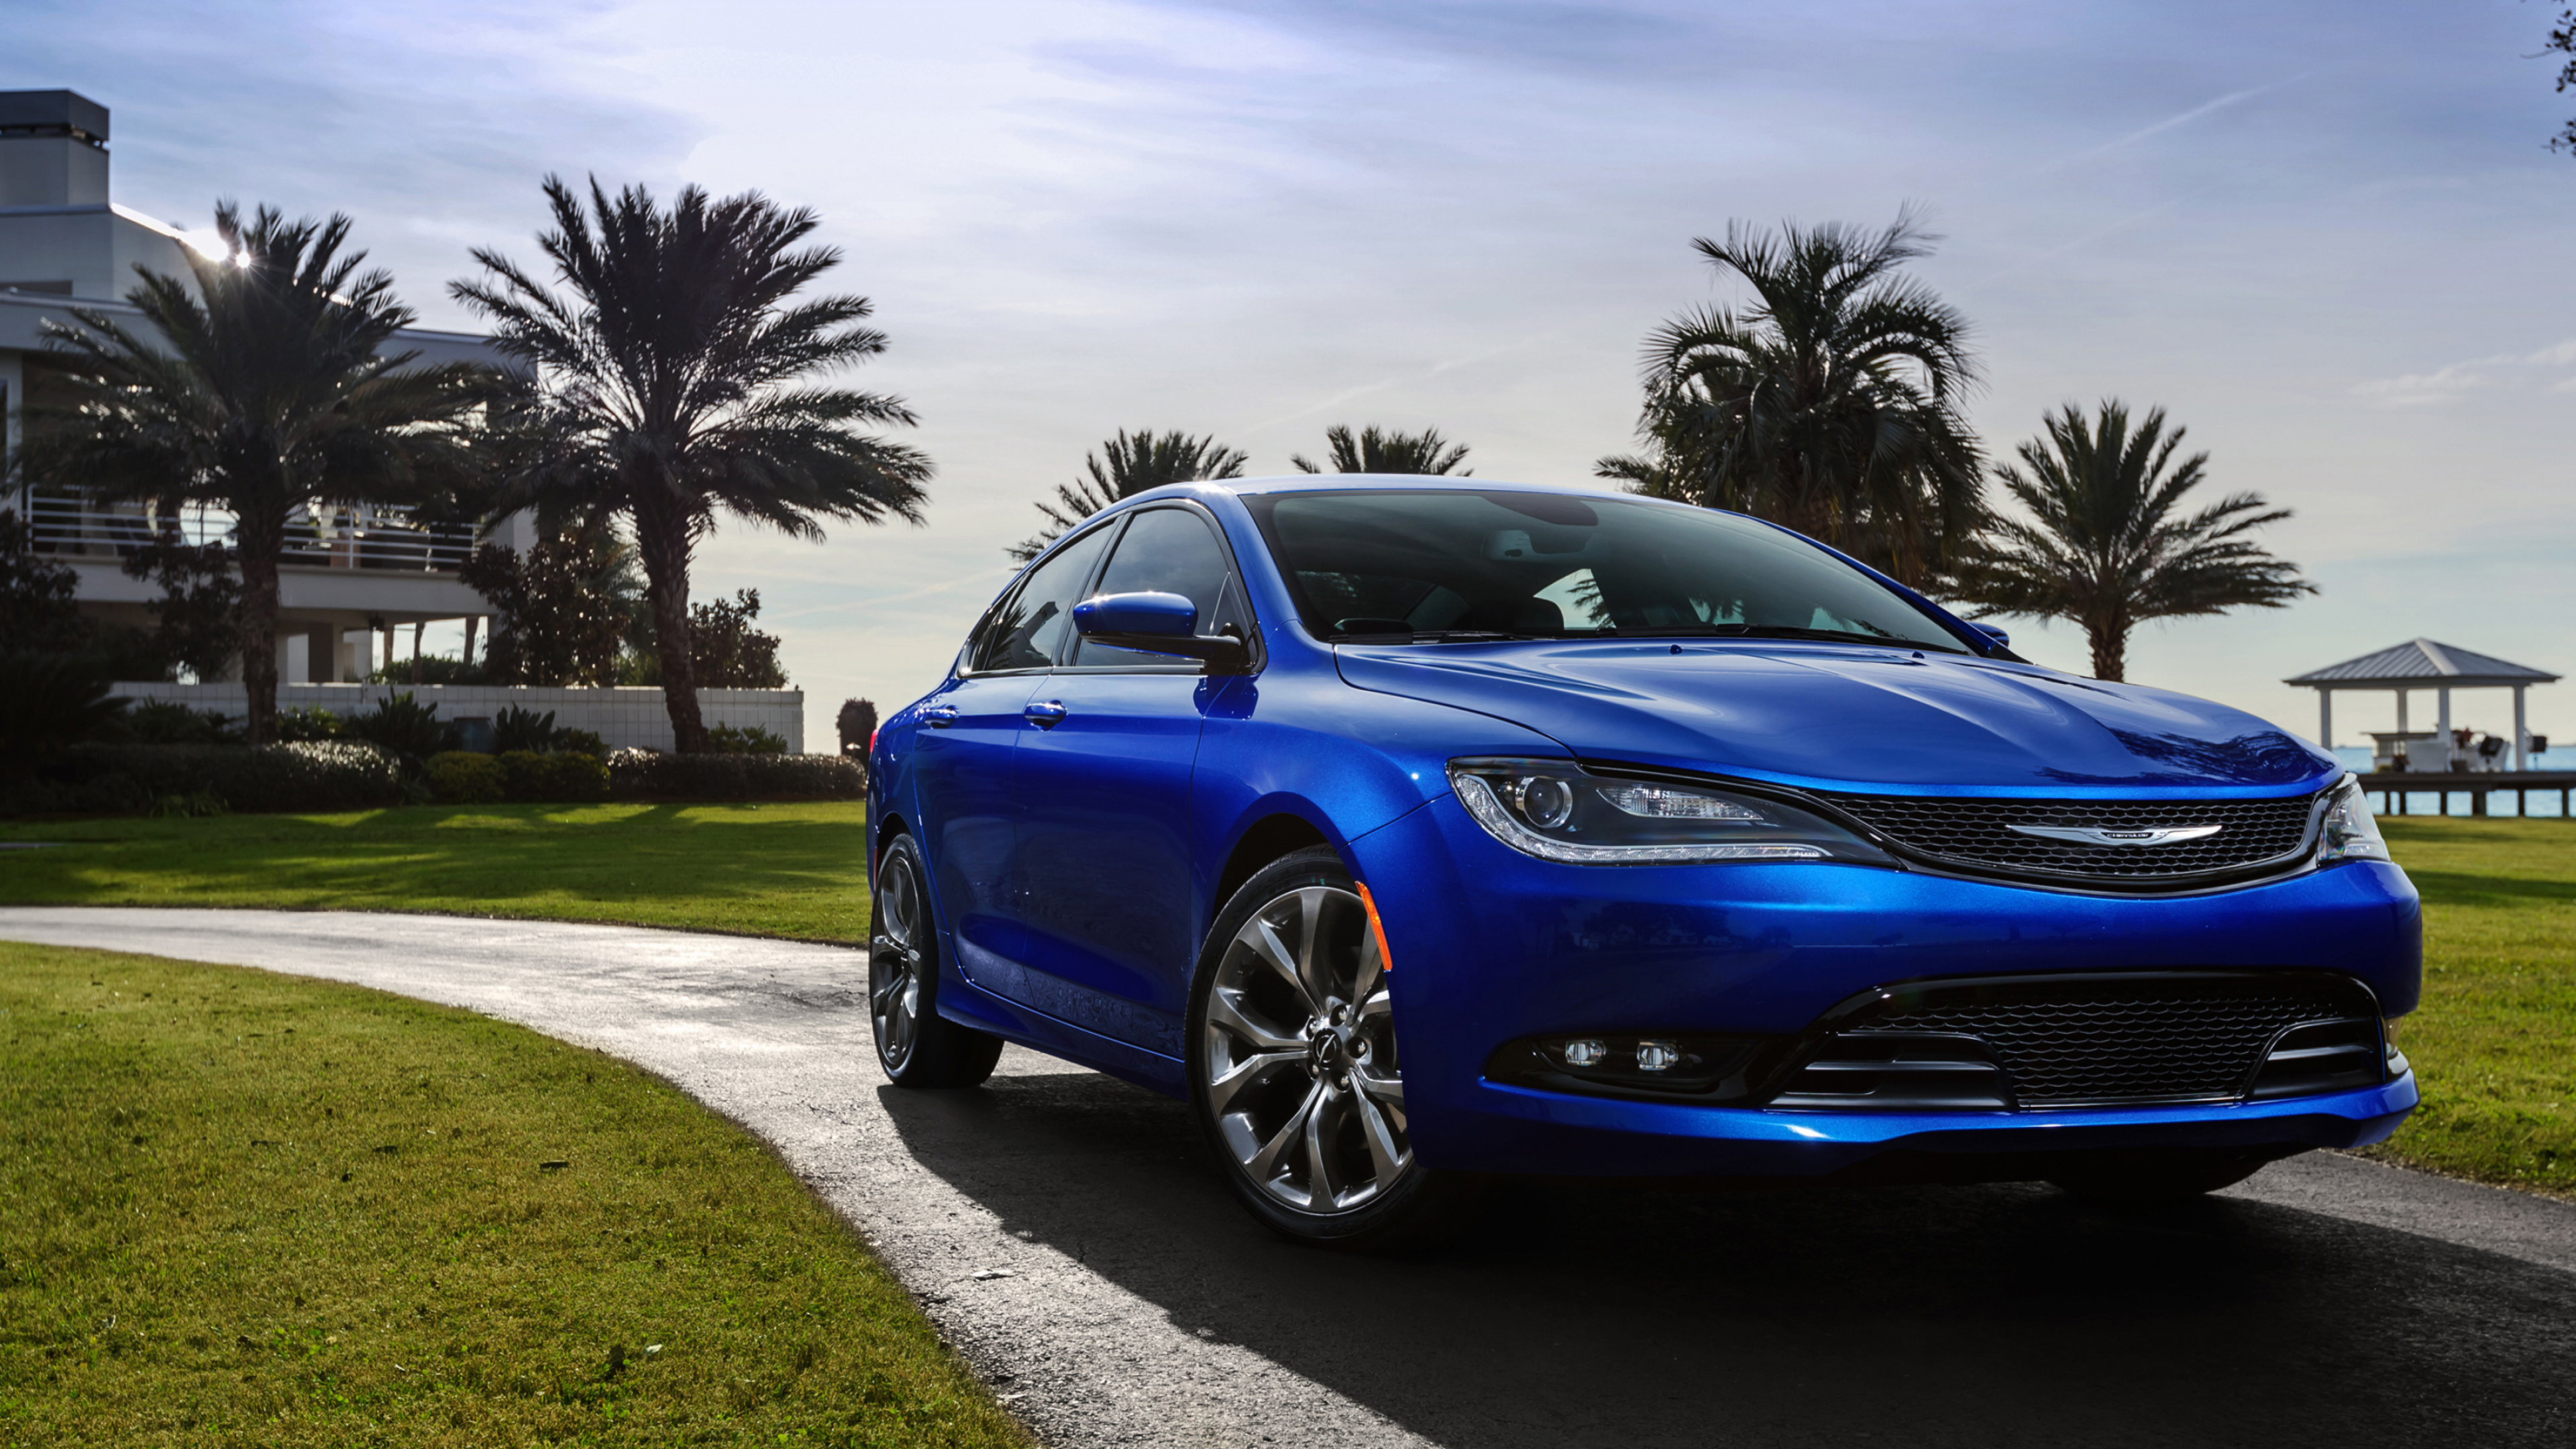 Chrysler, Cutting-edge technology, Sleek design, Car enthusiast's dream, 3840x2160 4K Desktop